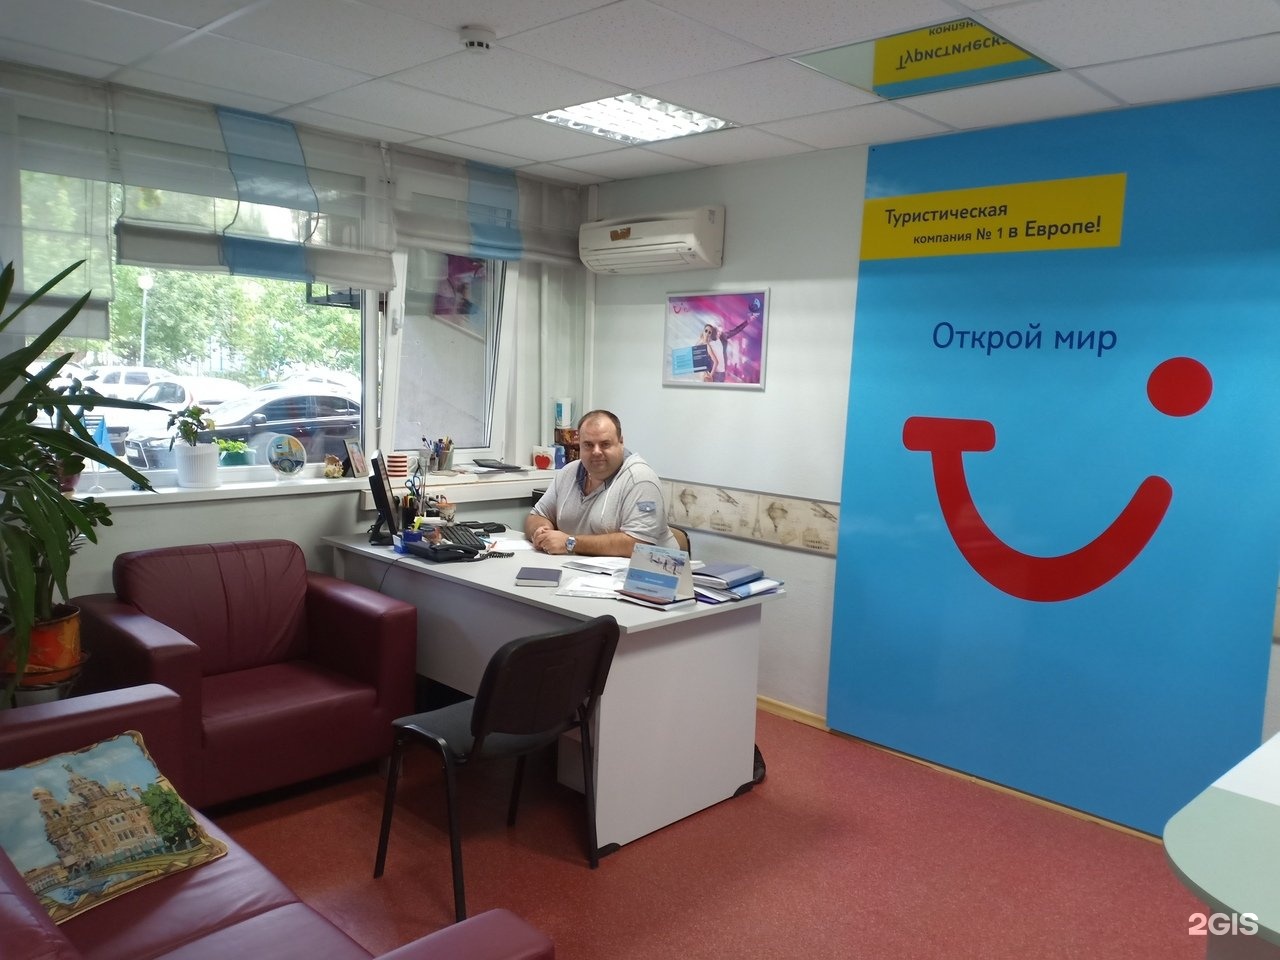 7. TUI Travel кампания внутри фото. Бюро путешествий Калининград фото офиса вход.